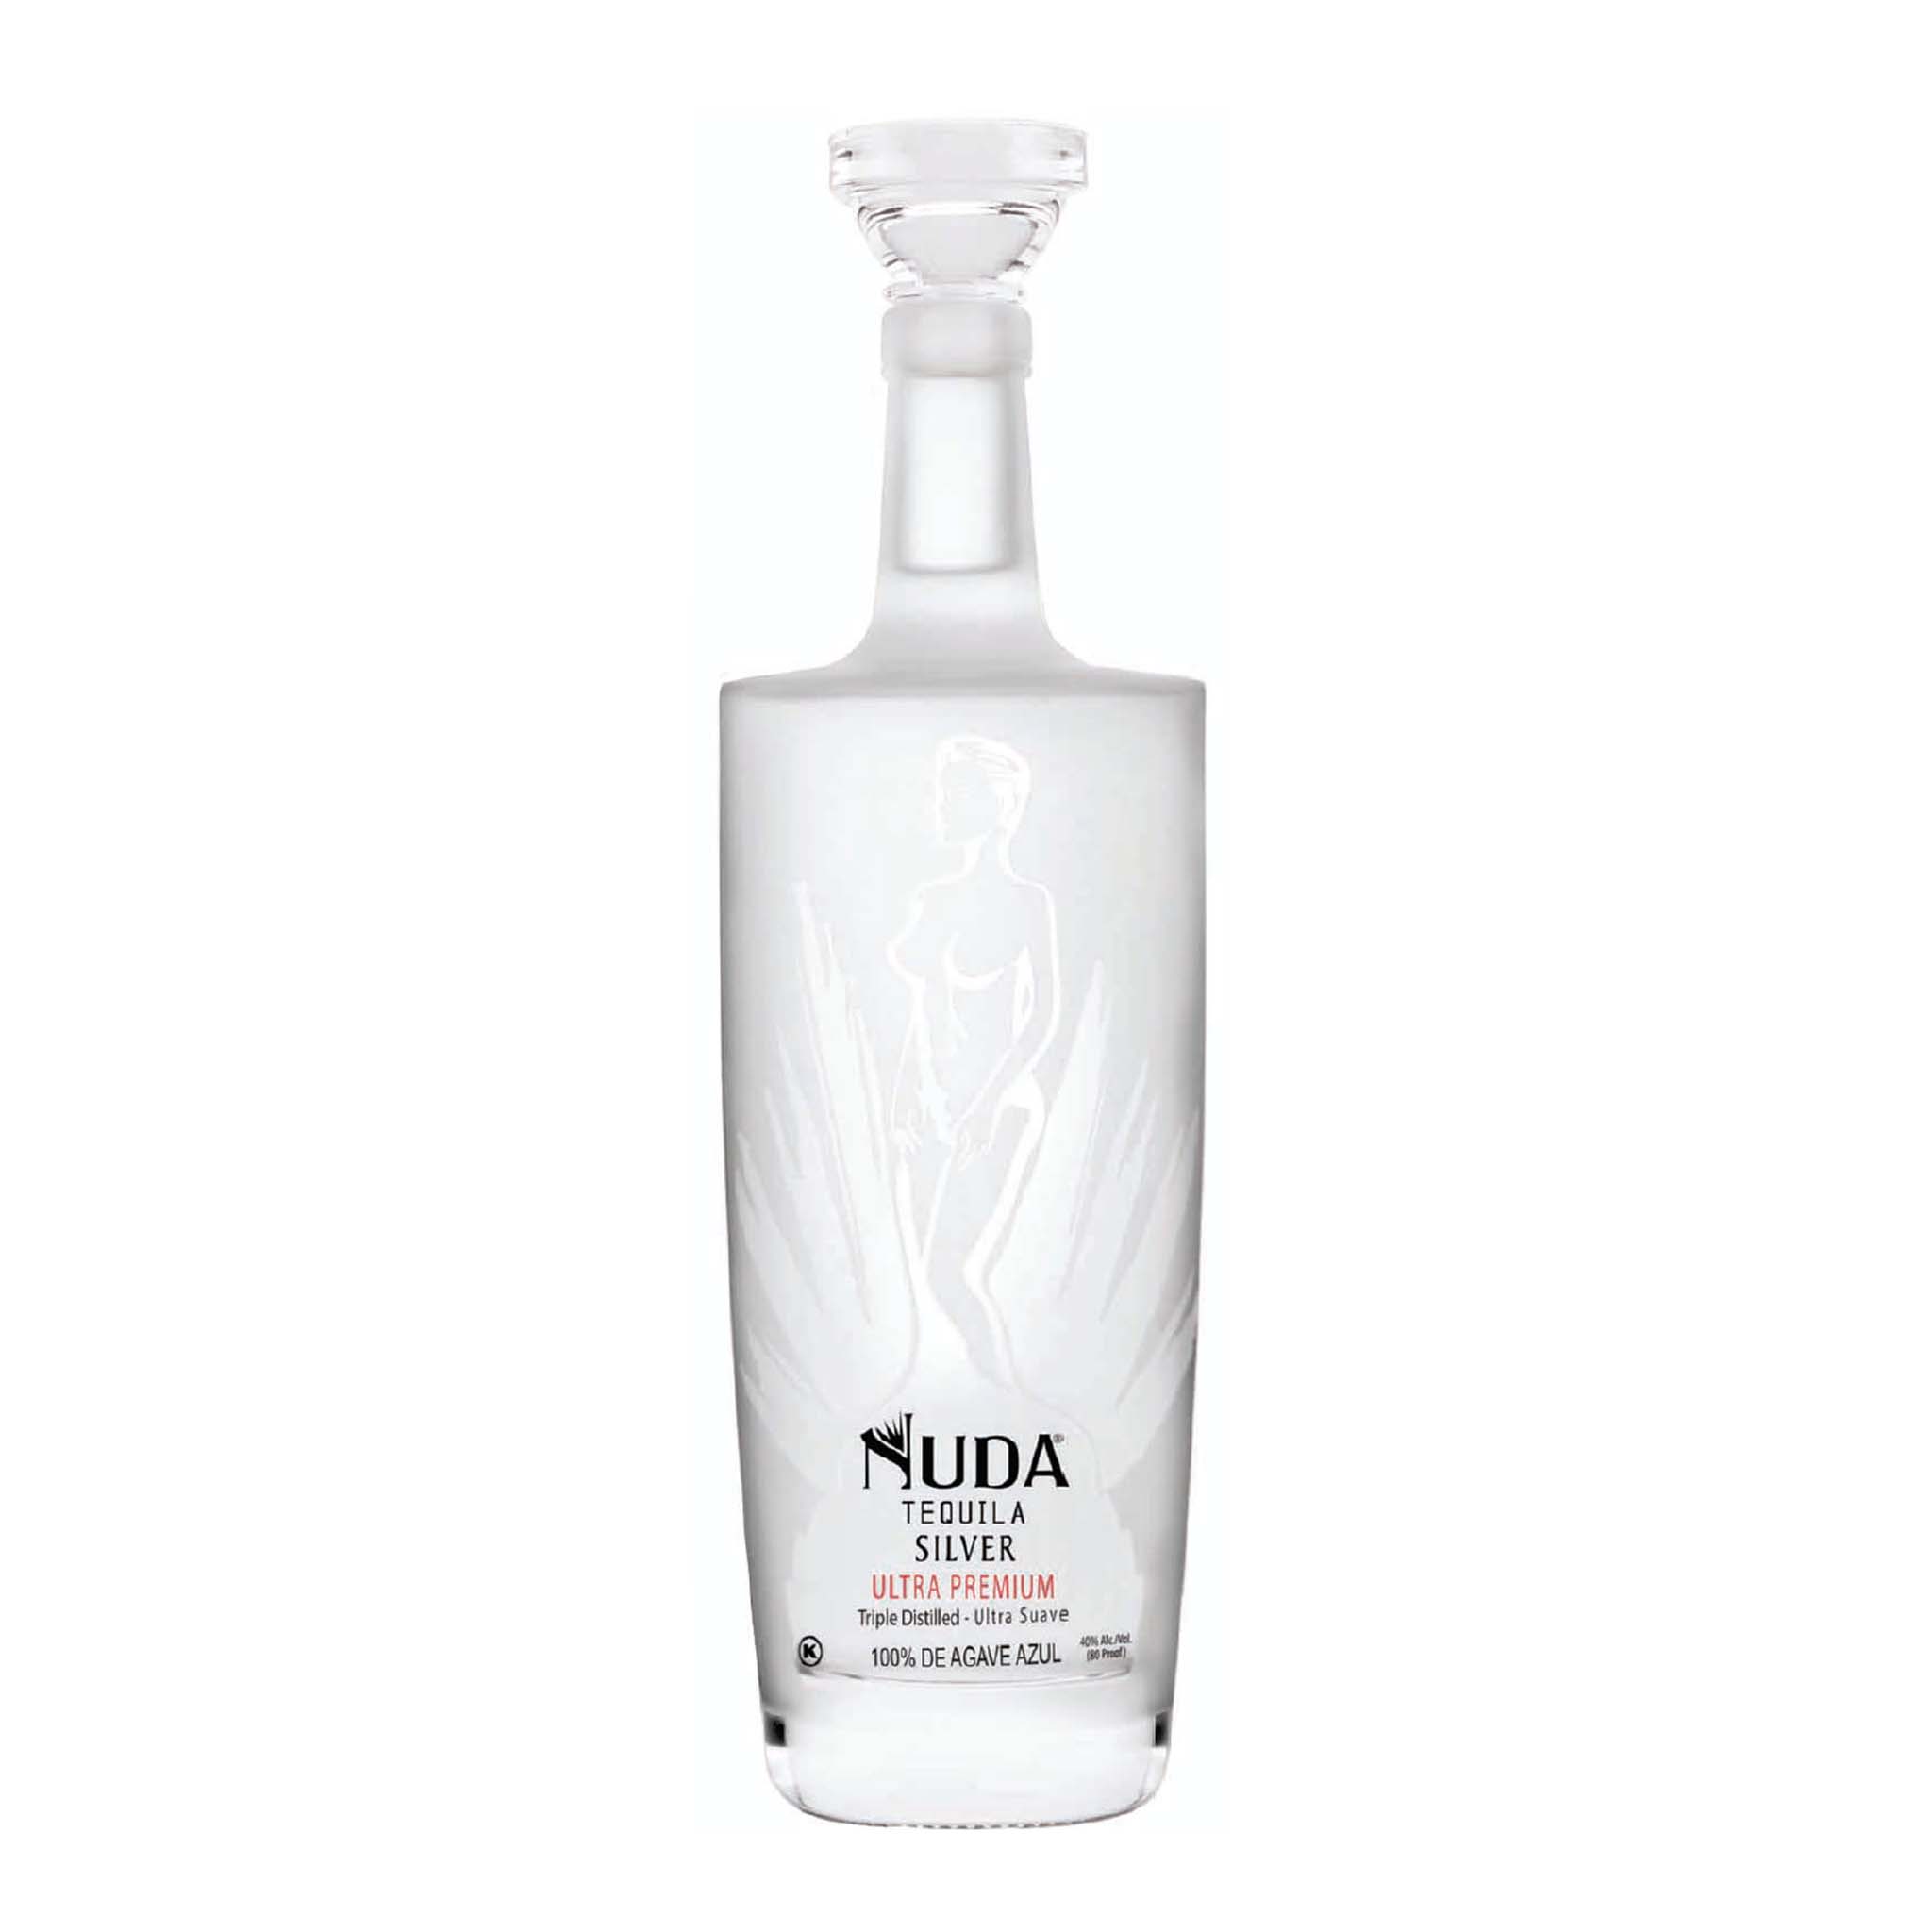 Tequila Nuda Silver